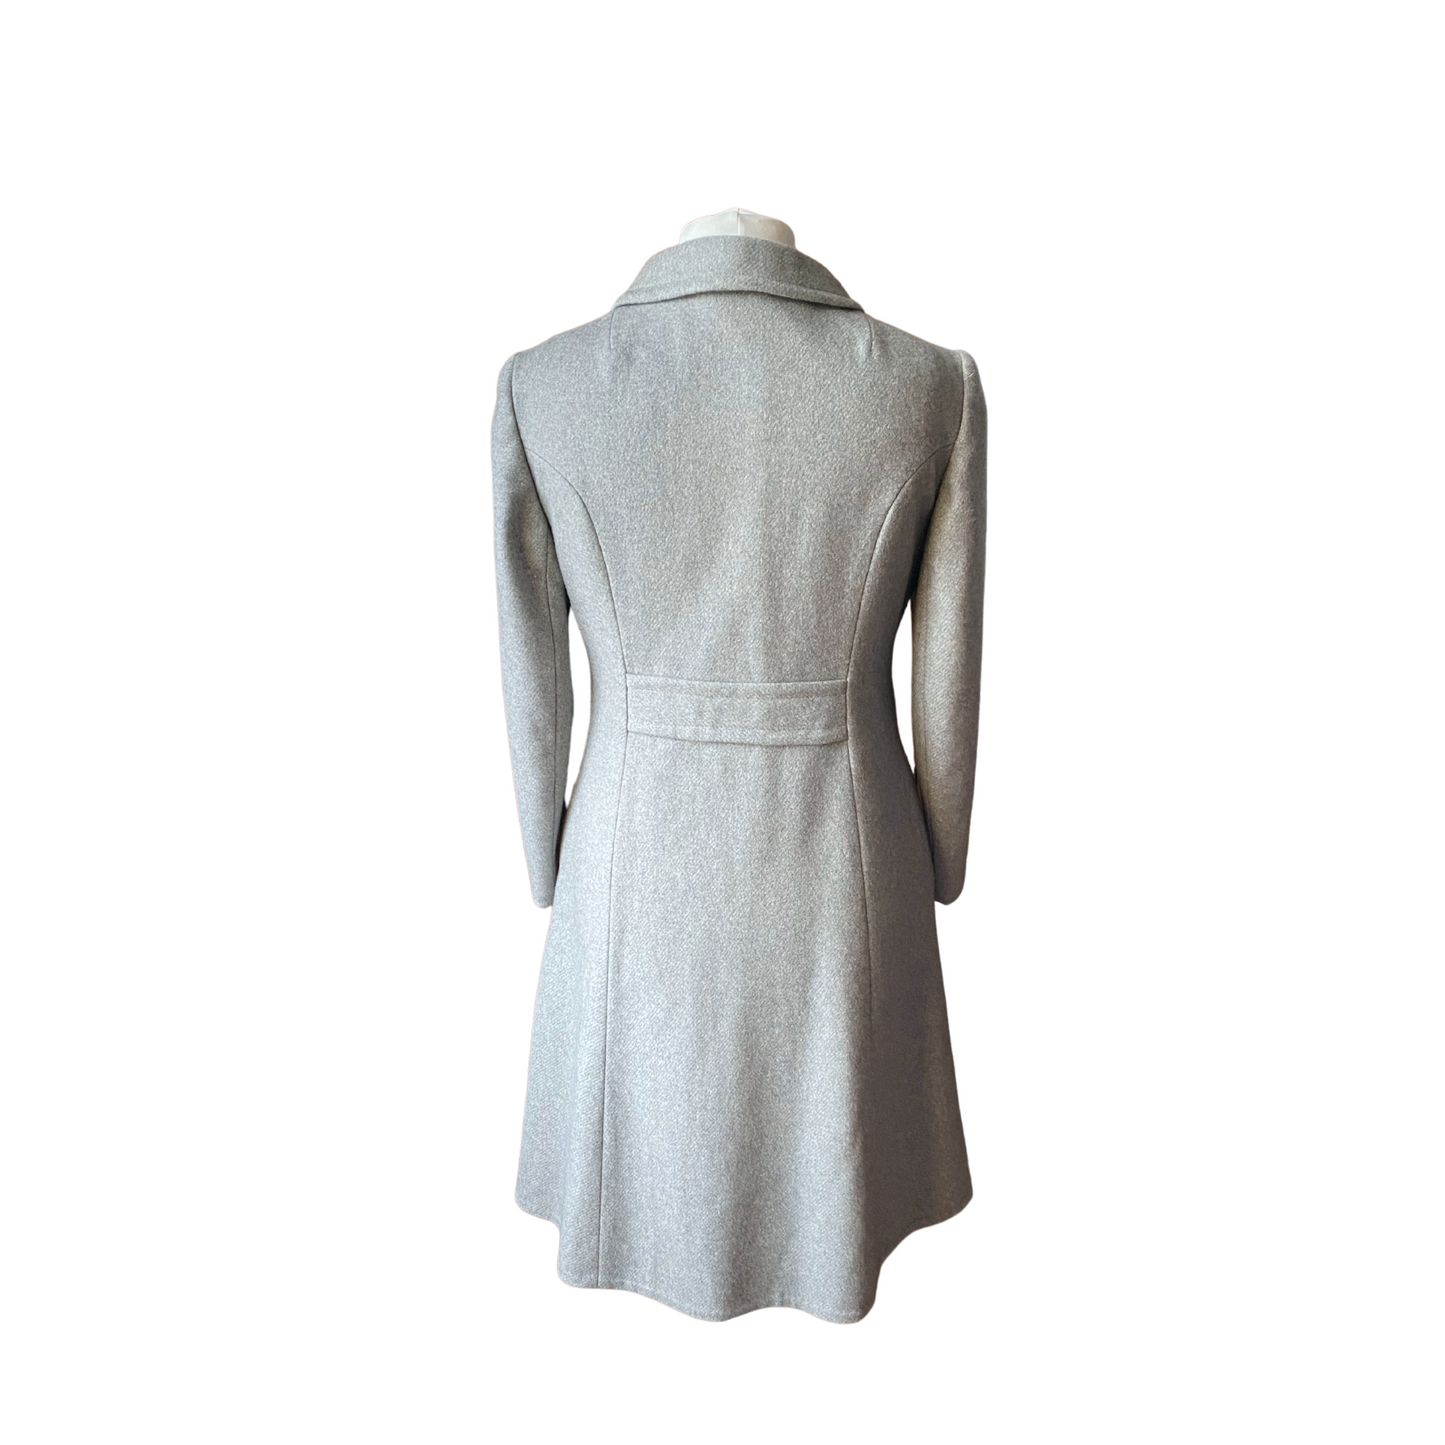 Grey wool 70s vintage coat - Back view showcasing faux belt panel